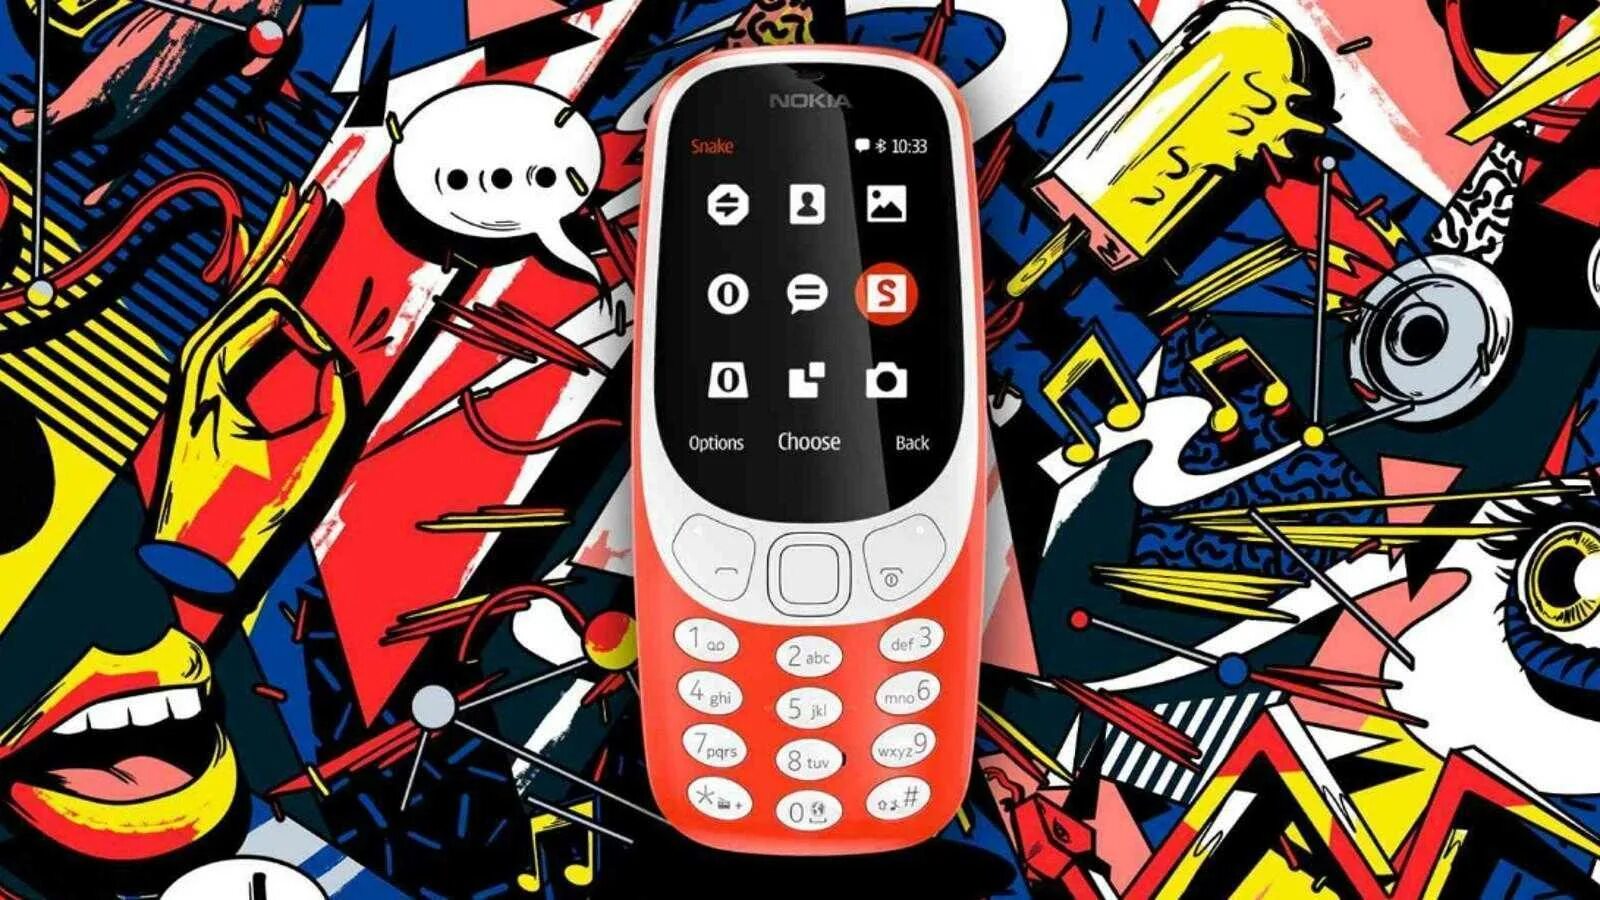 Обои на телефон нокиа. Nokia 3310. Нокиа 3310 2017. Nokia 3310 Dual SIM. Phone Nokia 3310.